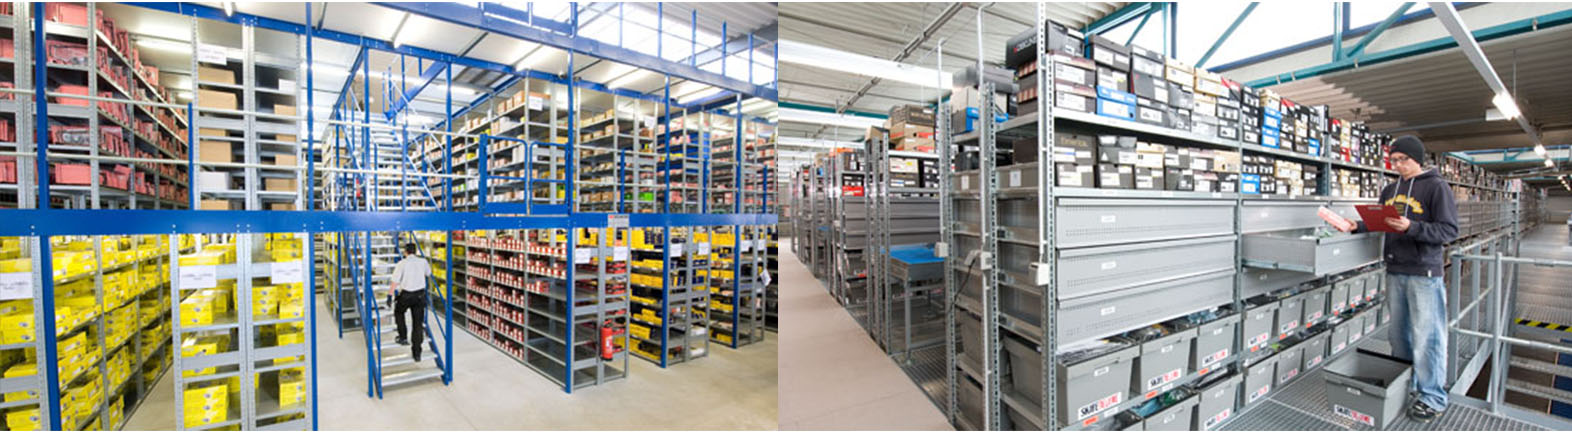 Warehouses with Multi-Level Mezzanine Systems. Quality Mobile Multi-Level Mezzanine Systems. SSI Schaefer. www.schaefershelving.com